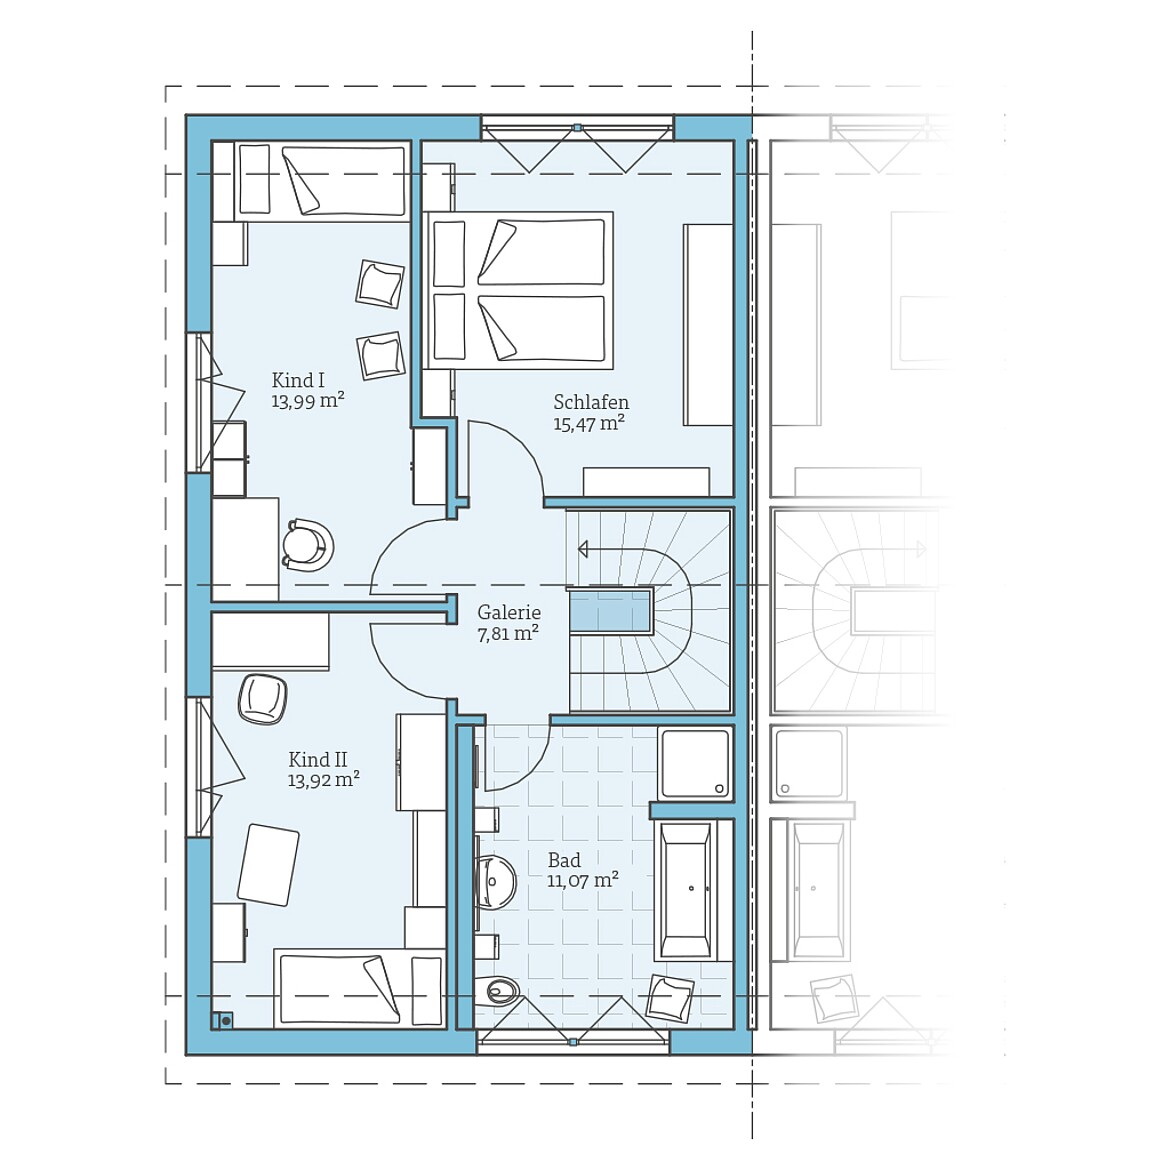 Prefabricated semi-detached house 25-125: Top floor plan